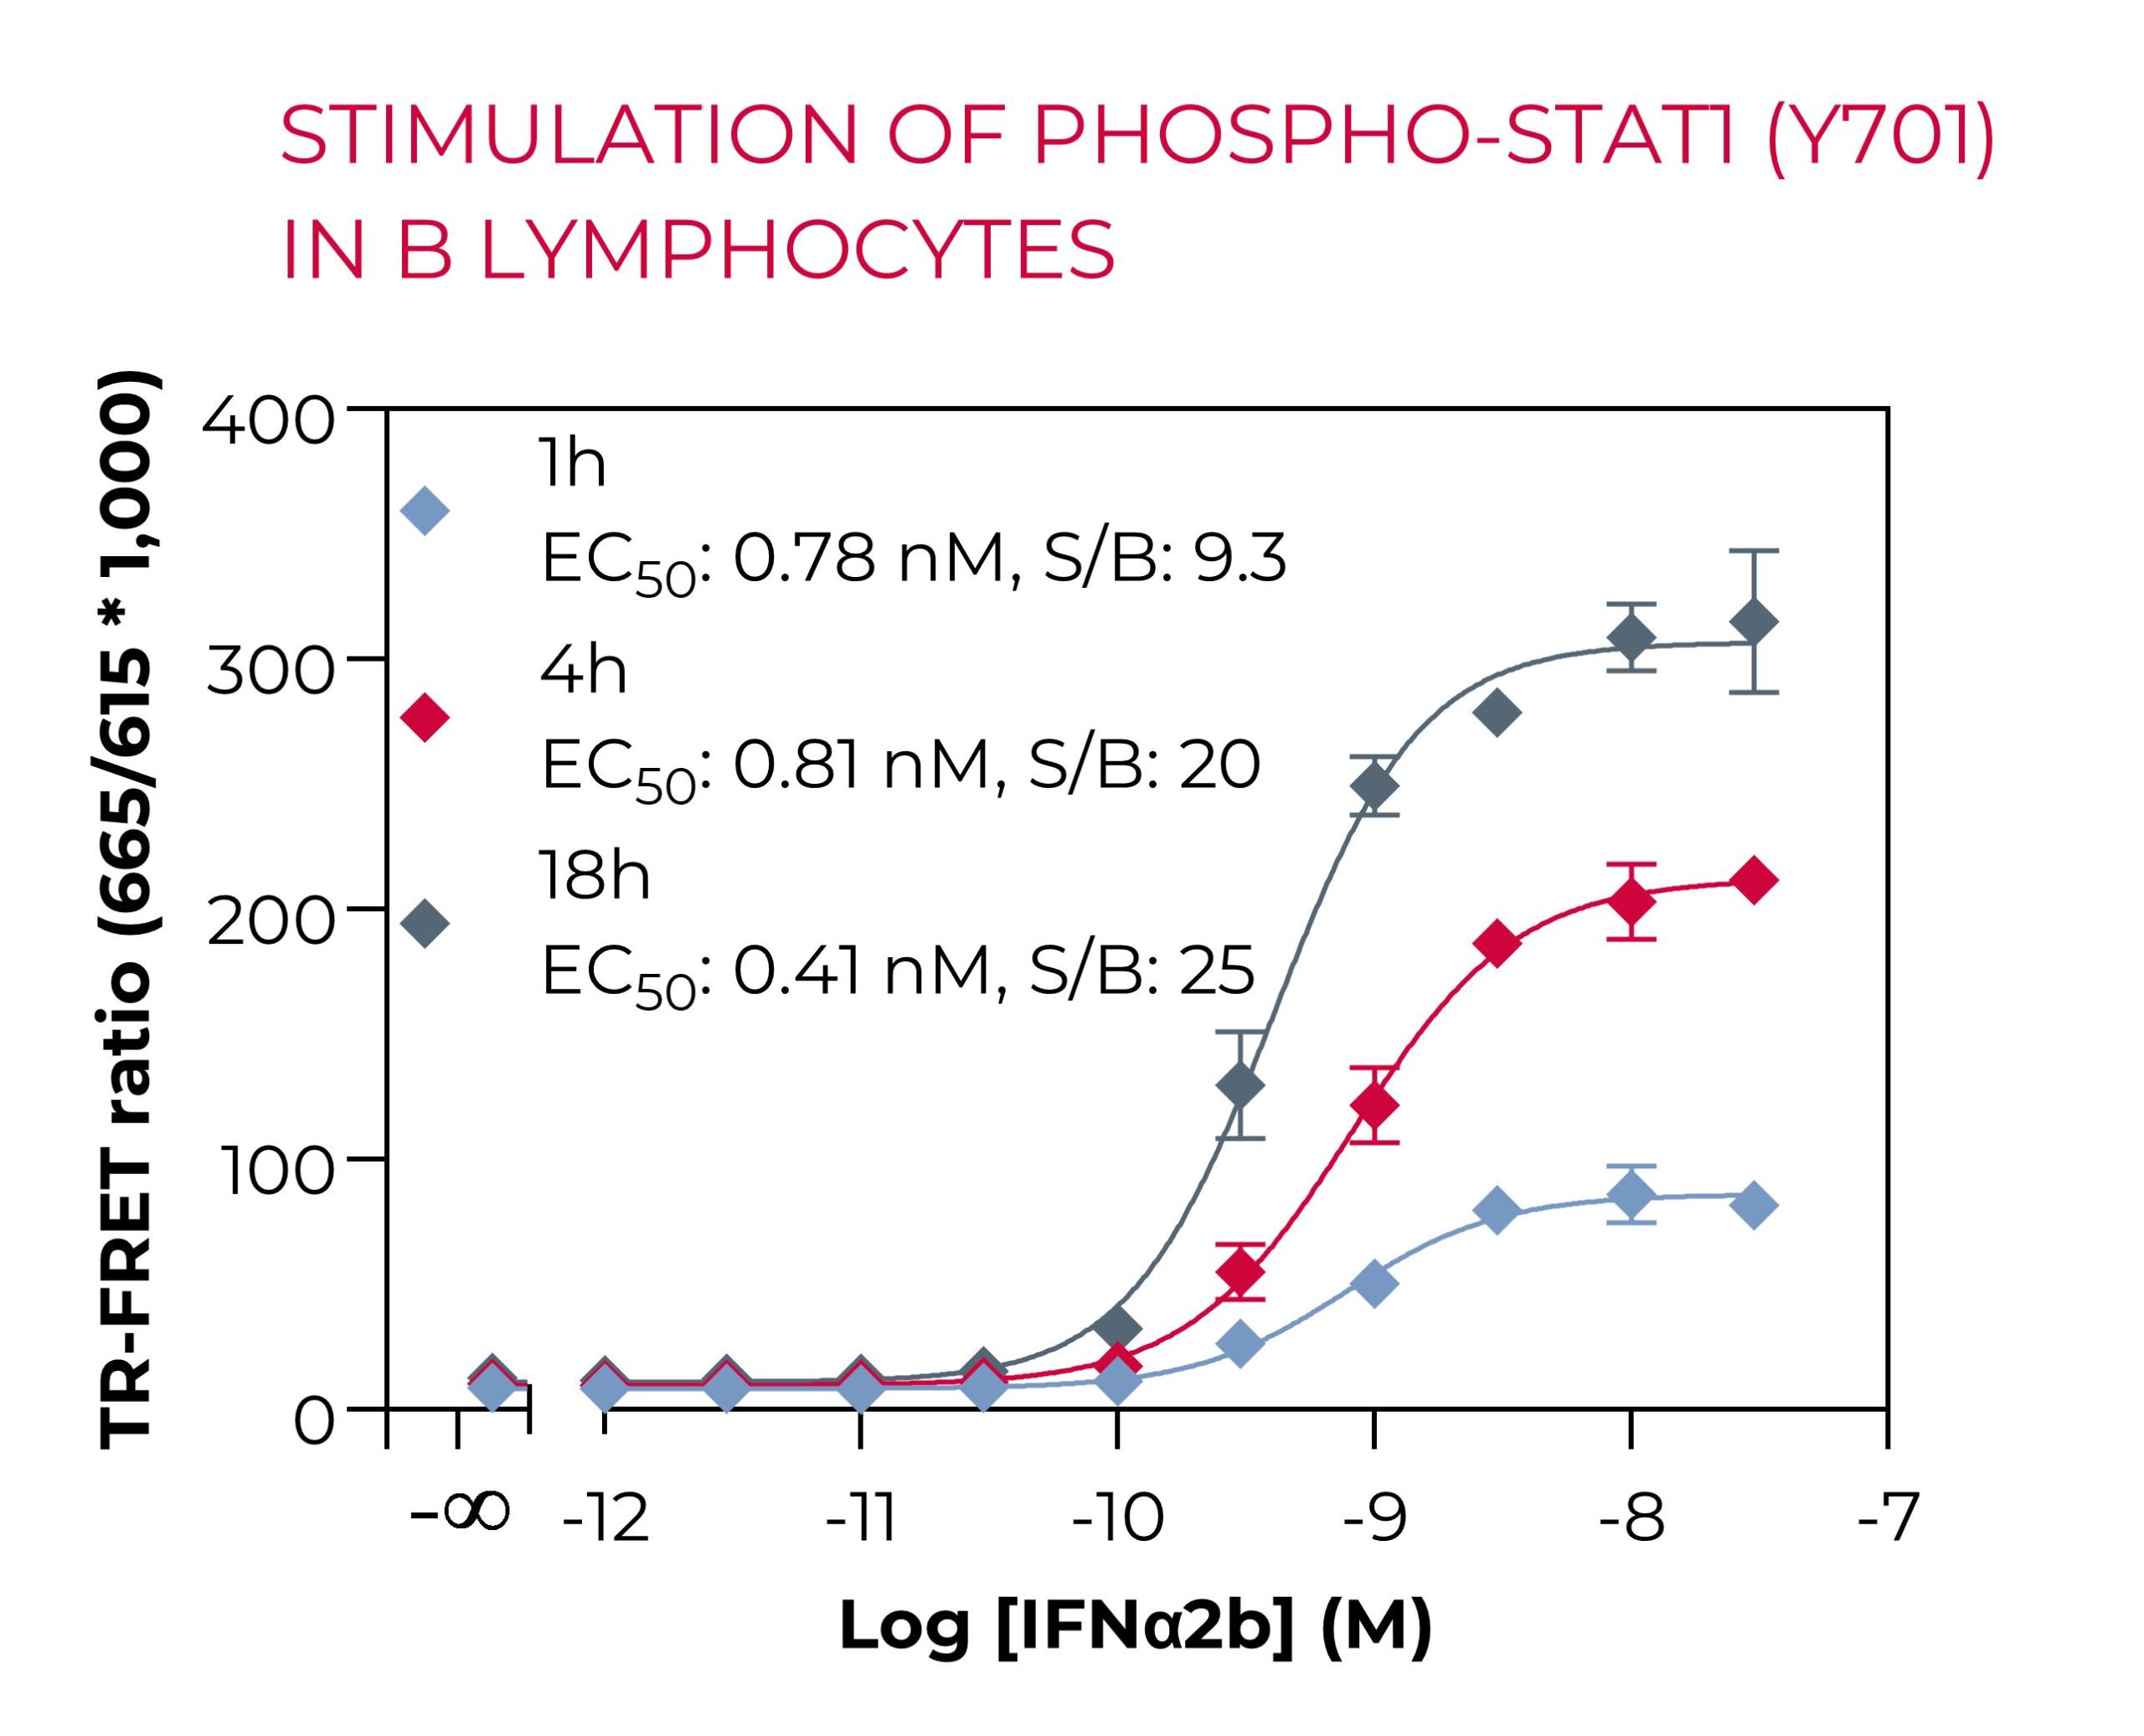 Stimulation of Phospho-STAT1 in B cells